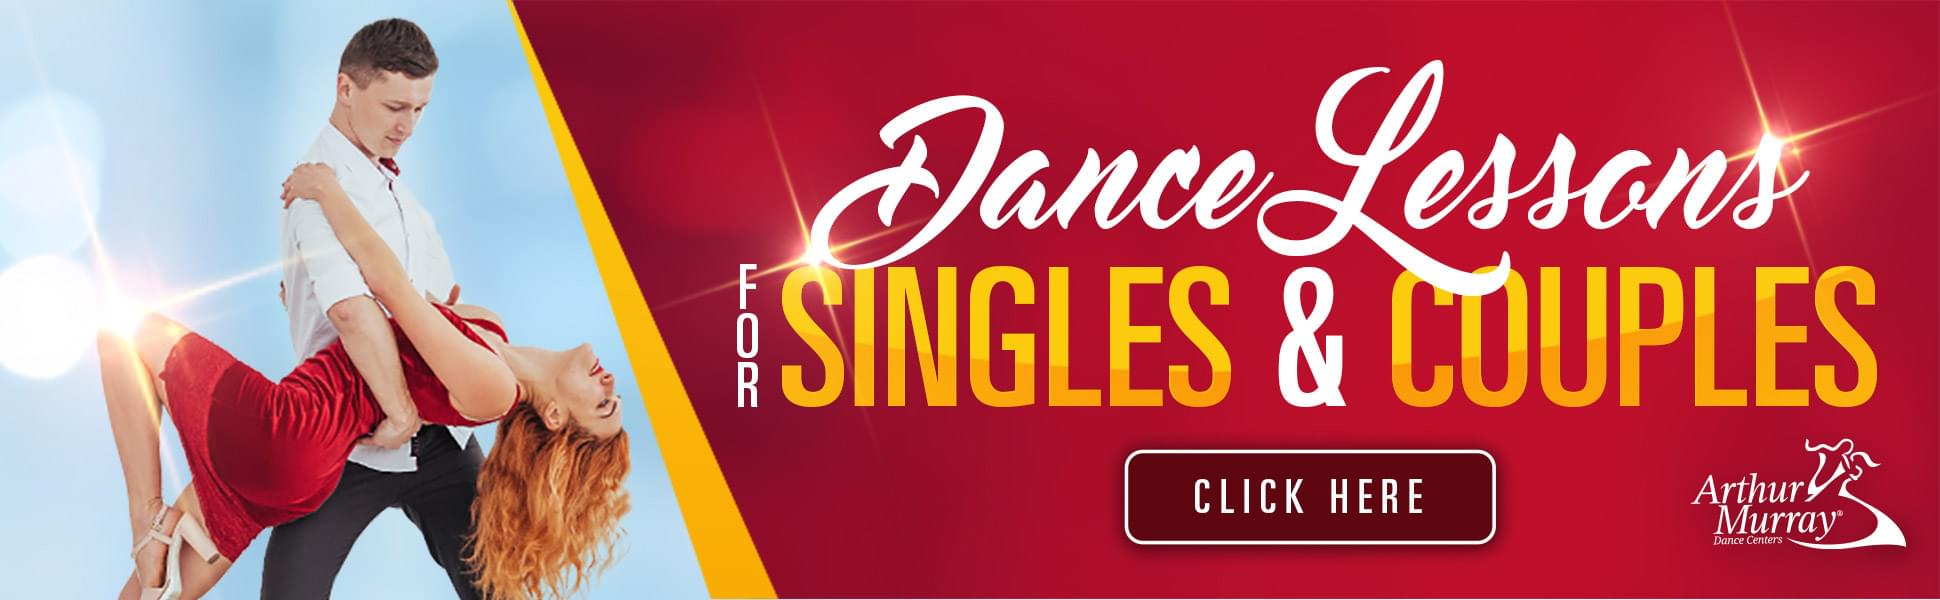 Mobile - Singles and Couples - Arthur Murray Dance Studio Red Bank